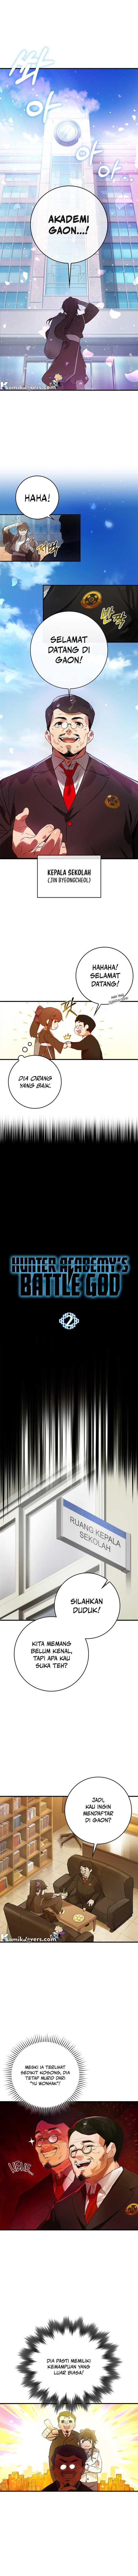 Hunter Academy’s Battle God Chapter 2